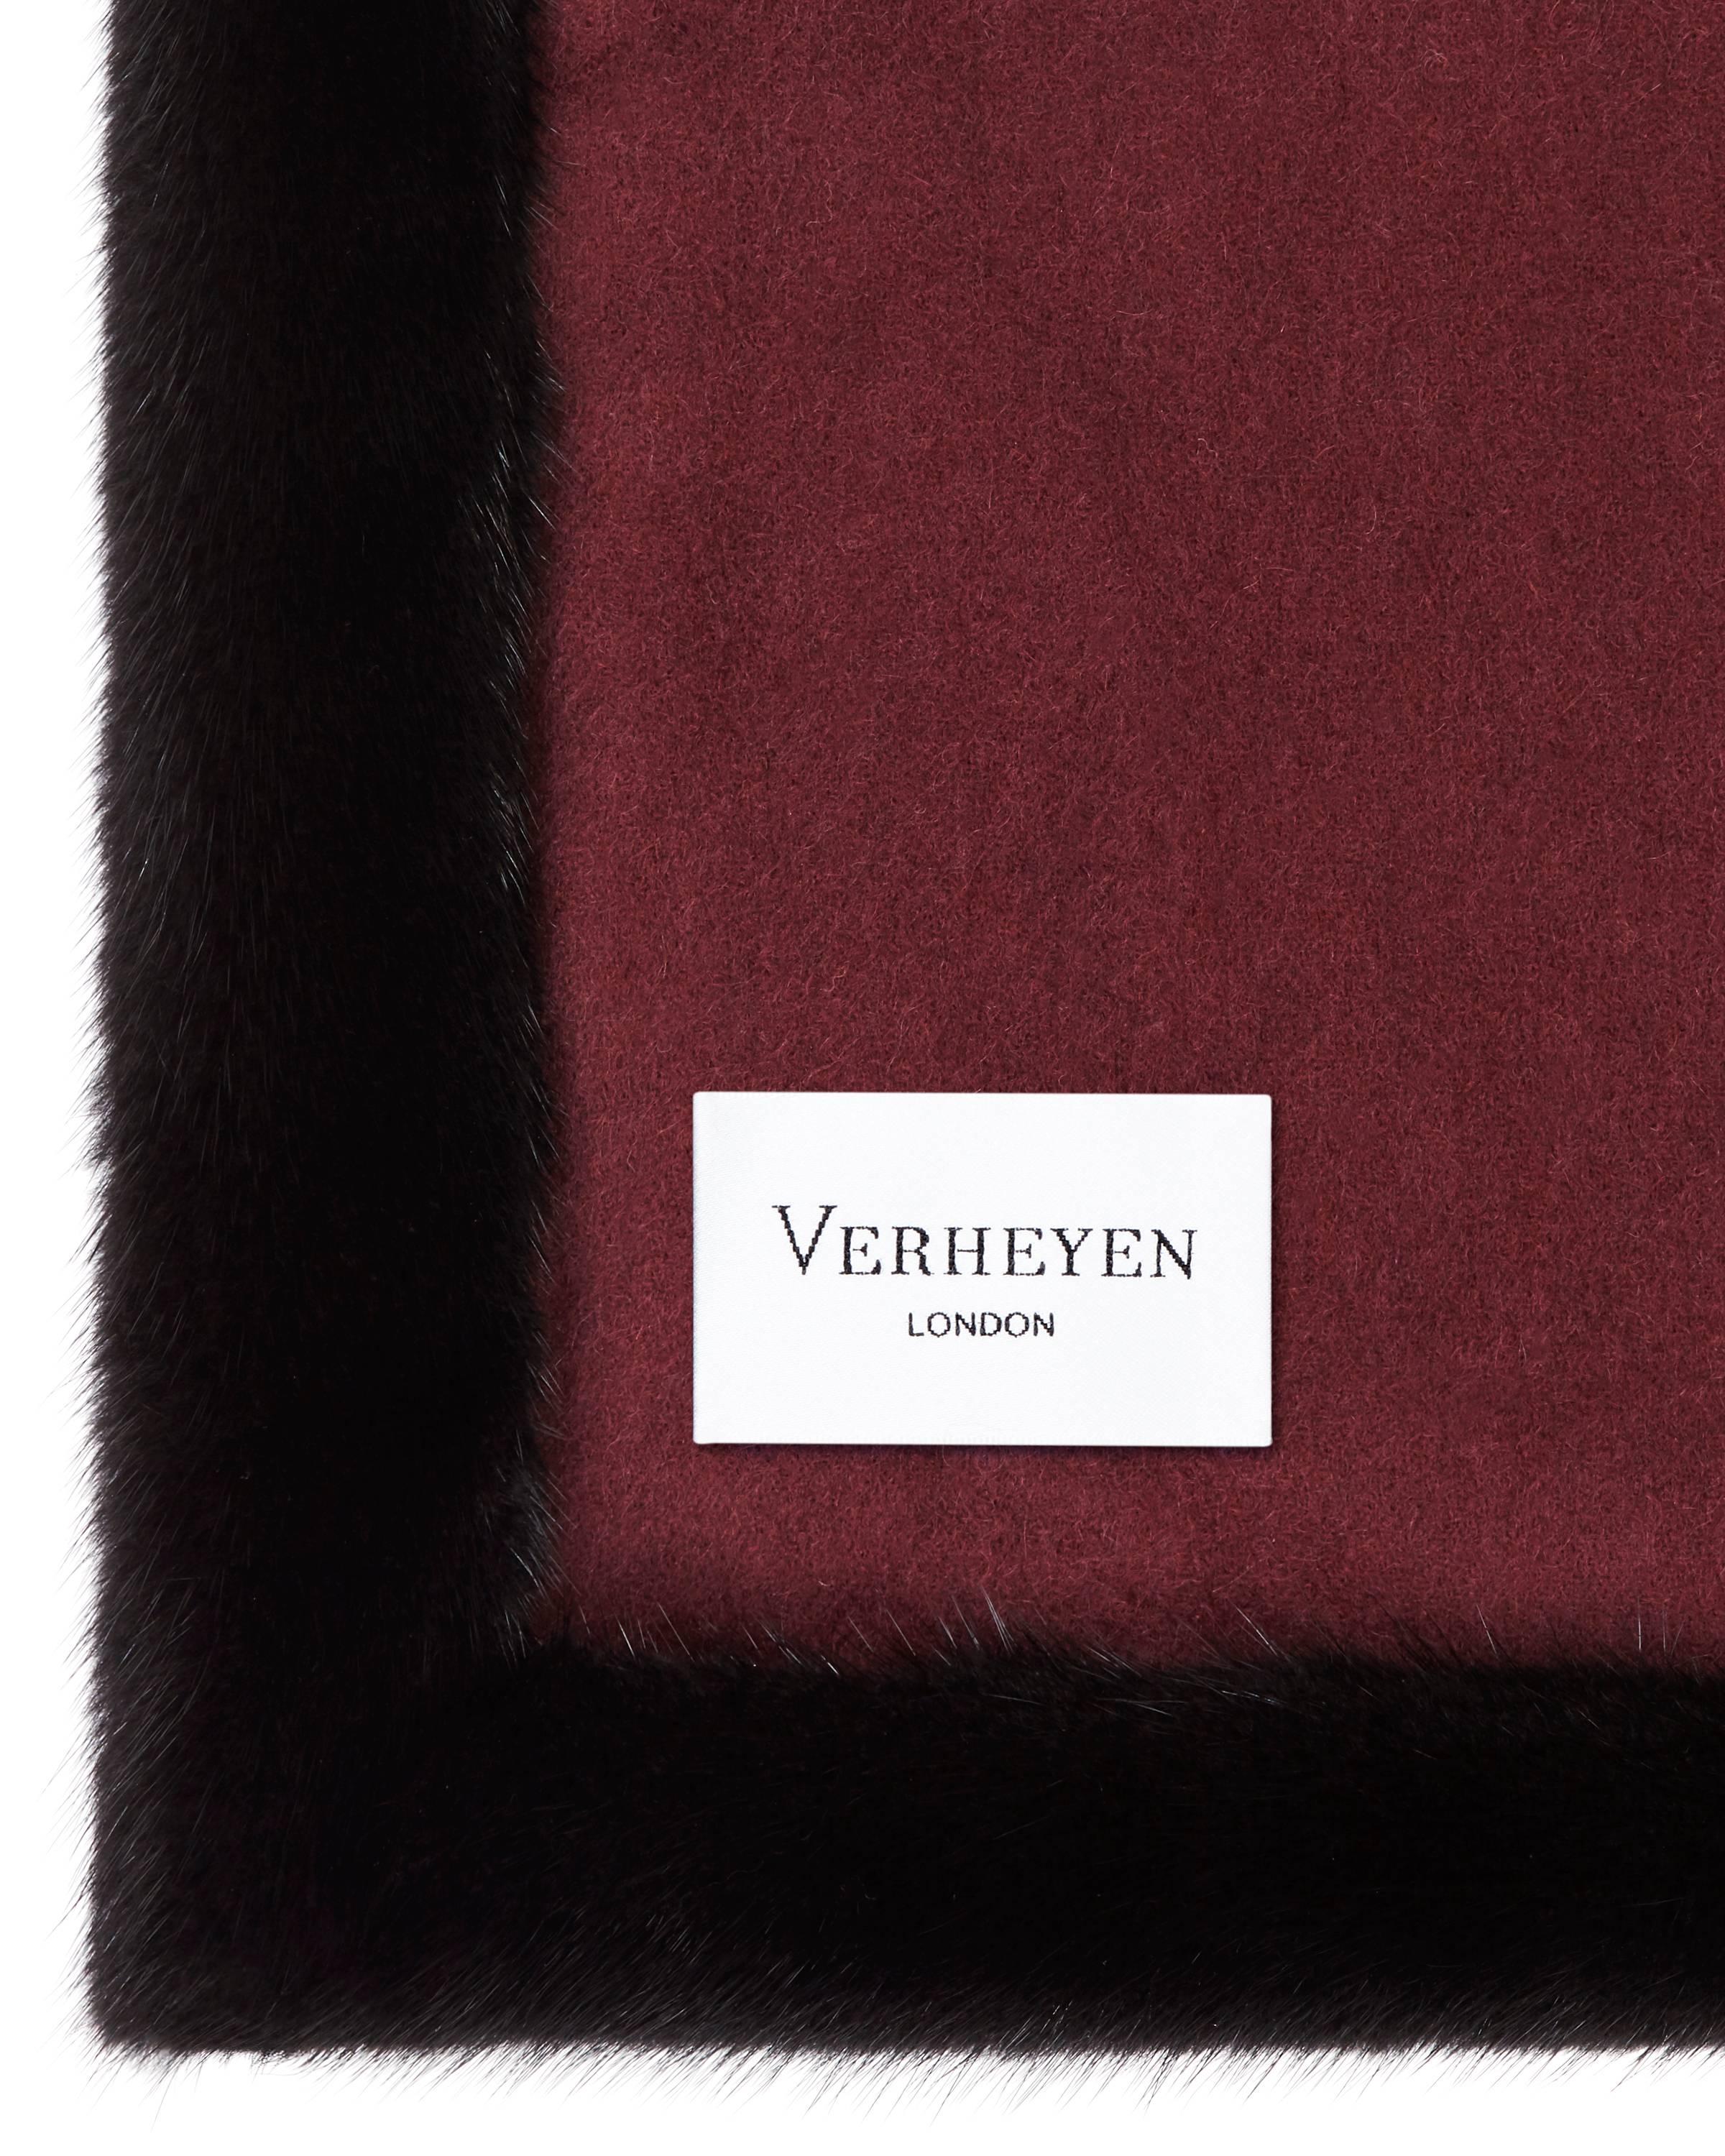 Black Verheyen London Limited Edition Mink Fur Trimmed Burgundy Cashmere Shawl  